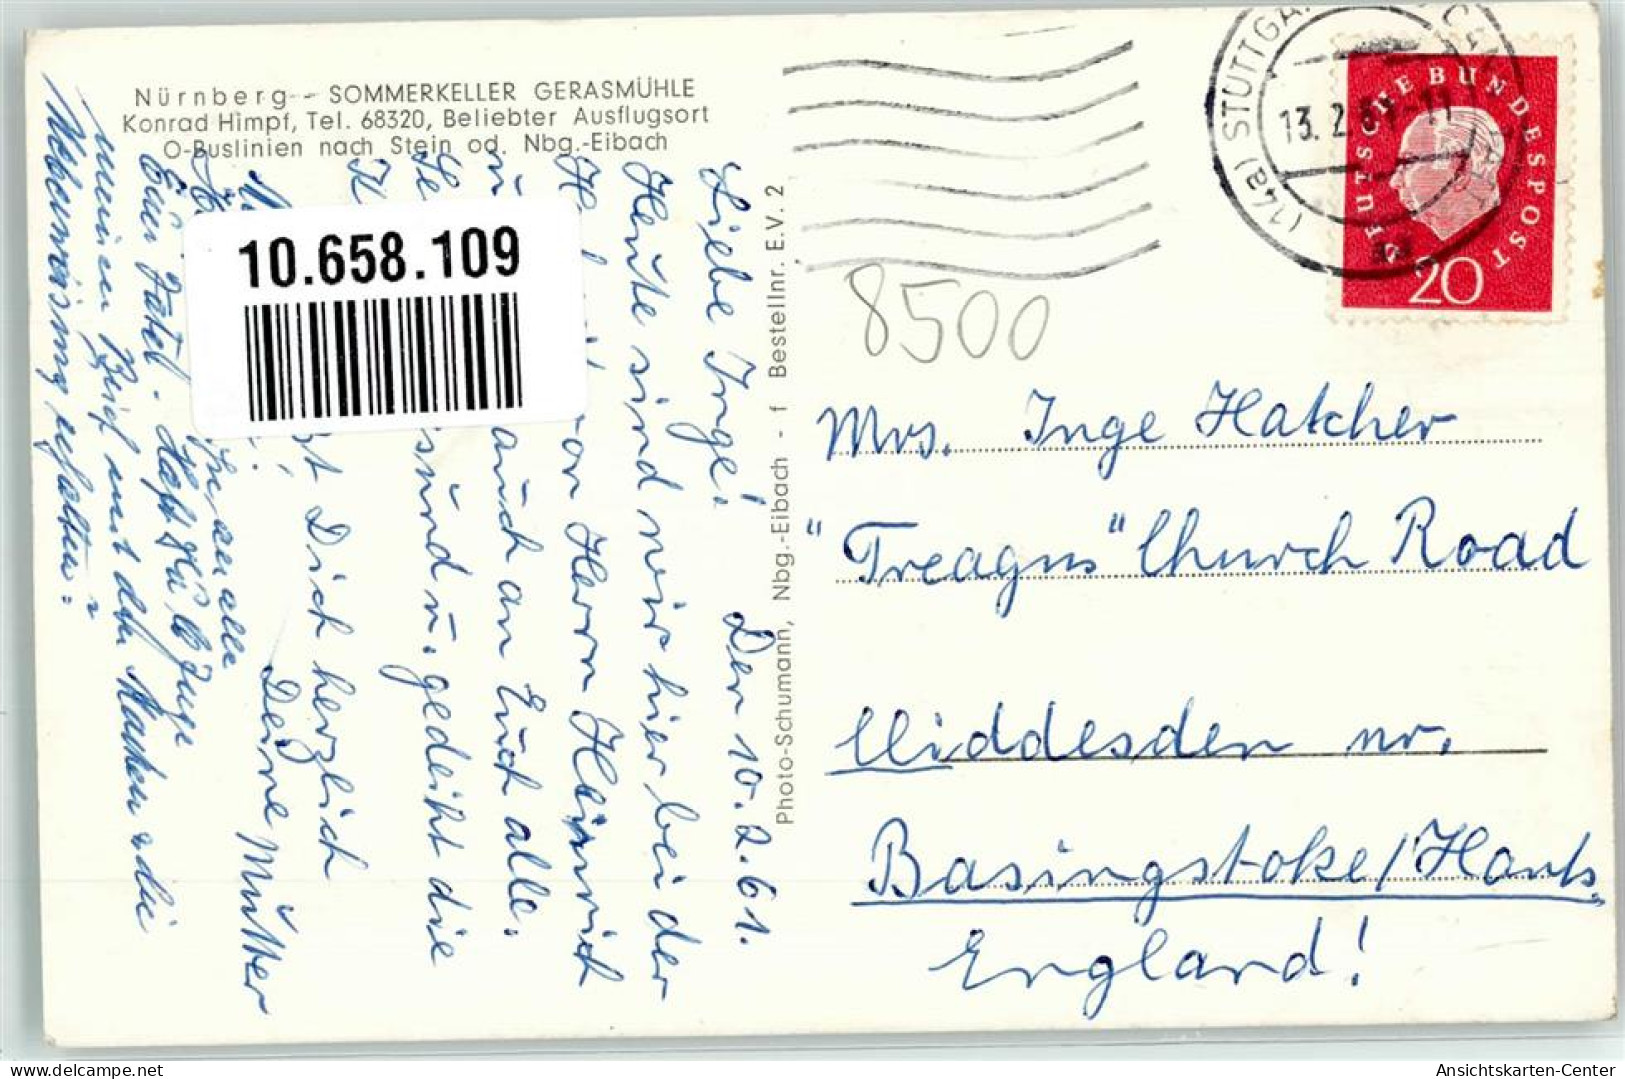 10658109 - Nuernberg - Nuernberg